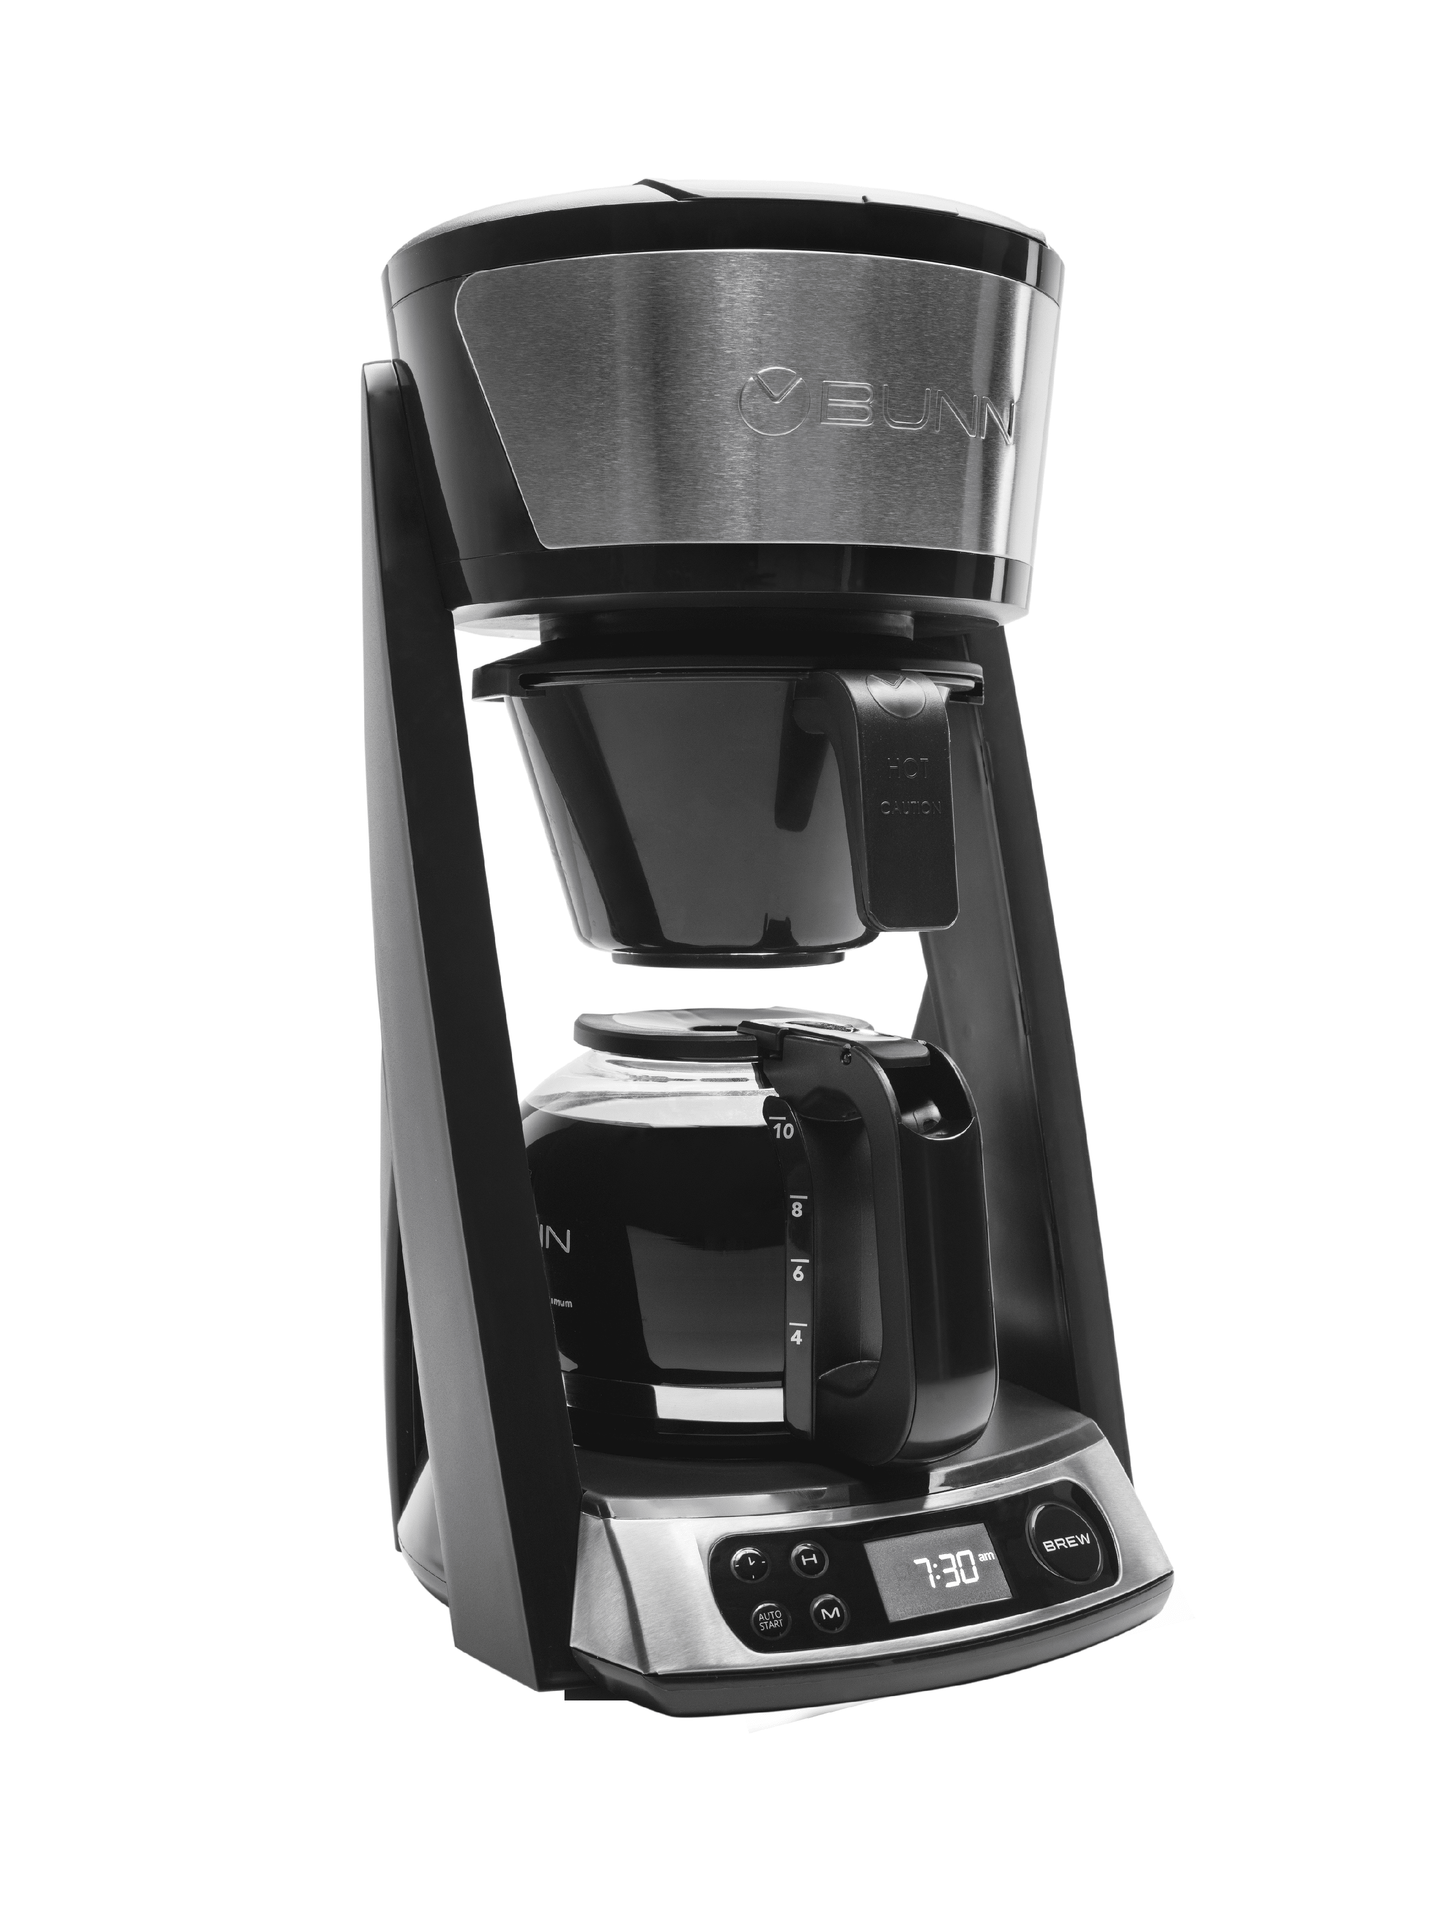 BUNN HB Heat N' Brew Programmable Coffee Maker, 10 cup, Stainless Steel, 46500.0003